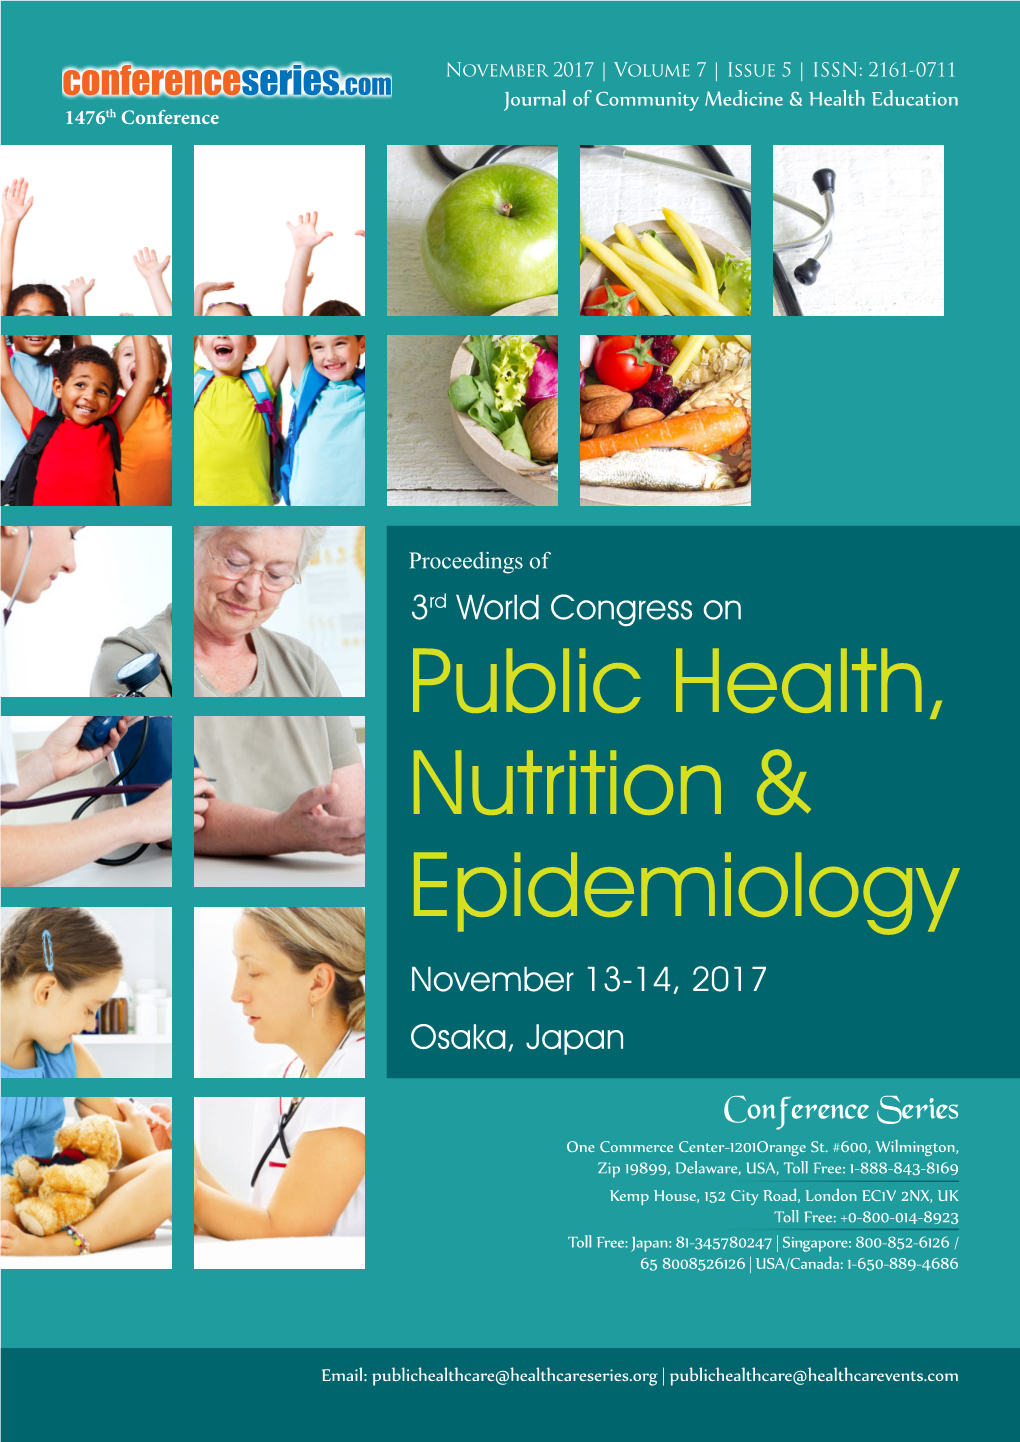 Public Health, Nutrition & Epidemiology